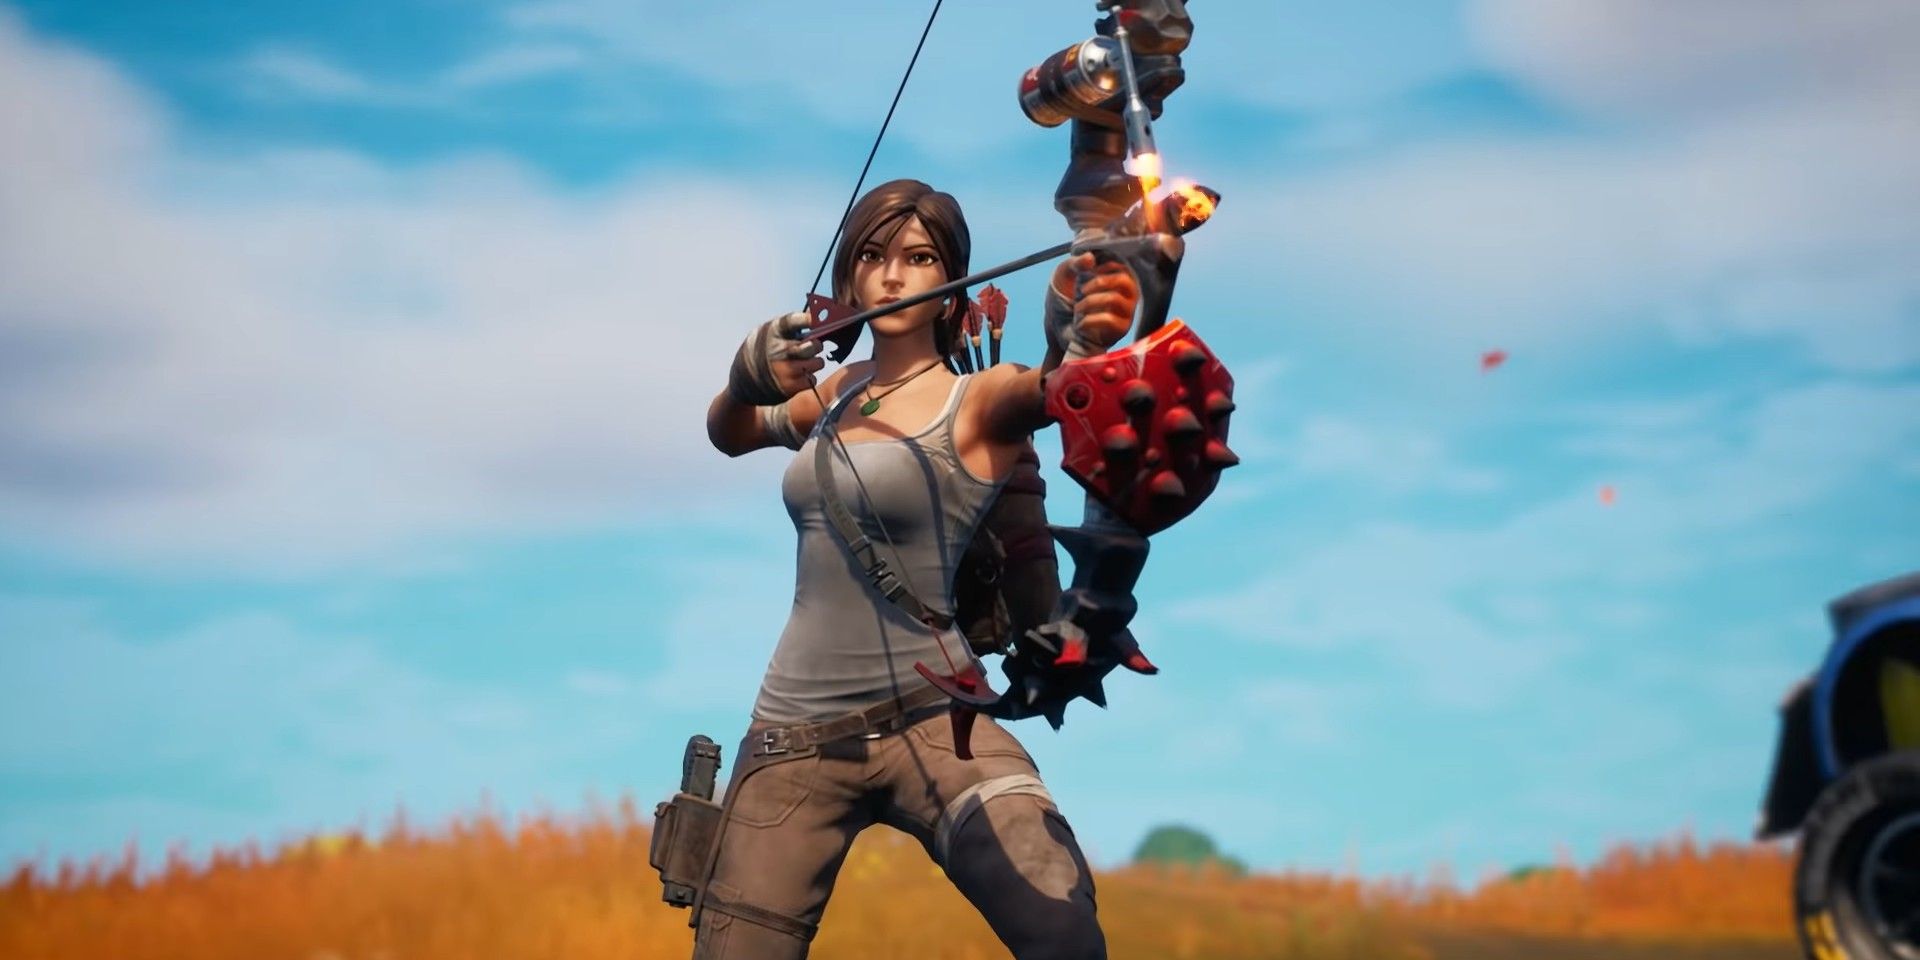 A Fortnite Lara Croft skin drawing a bow.